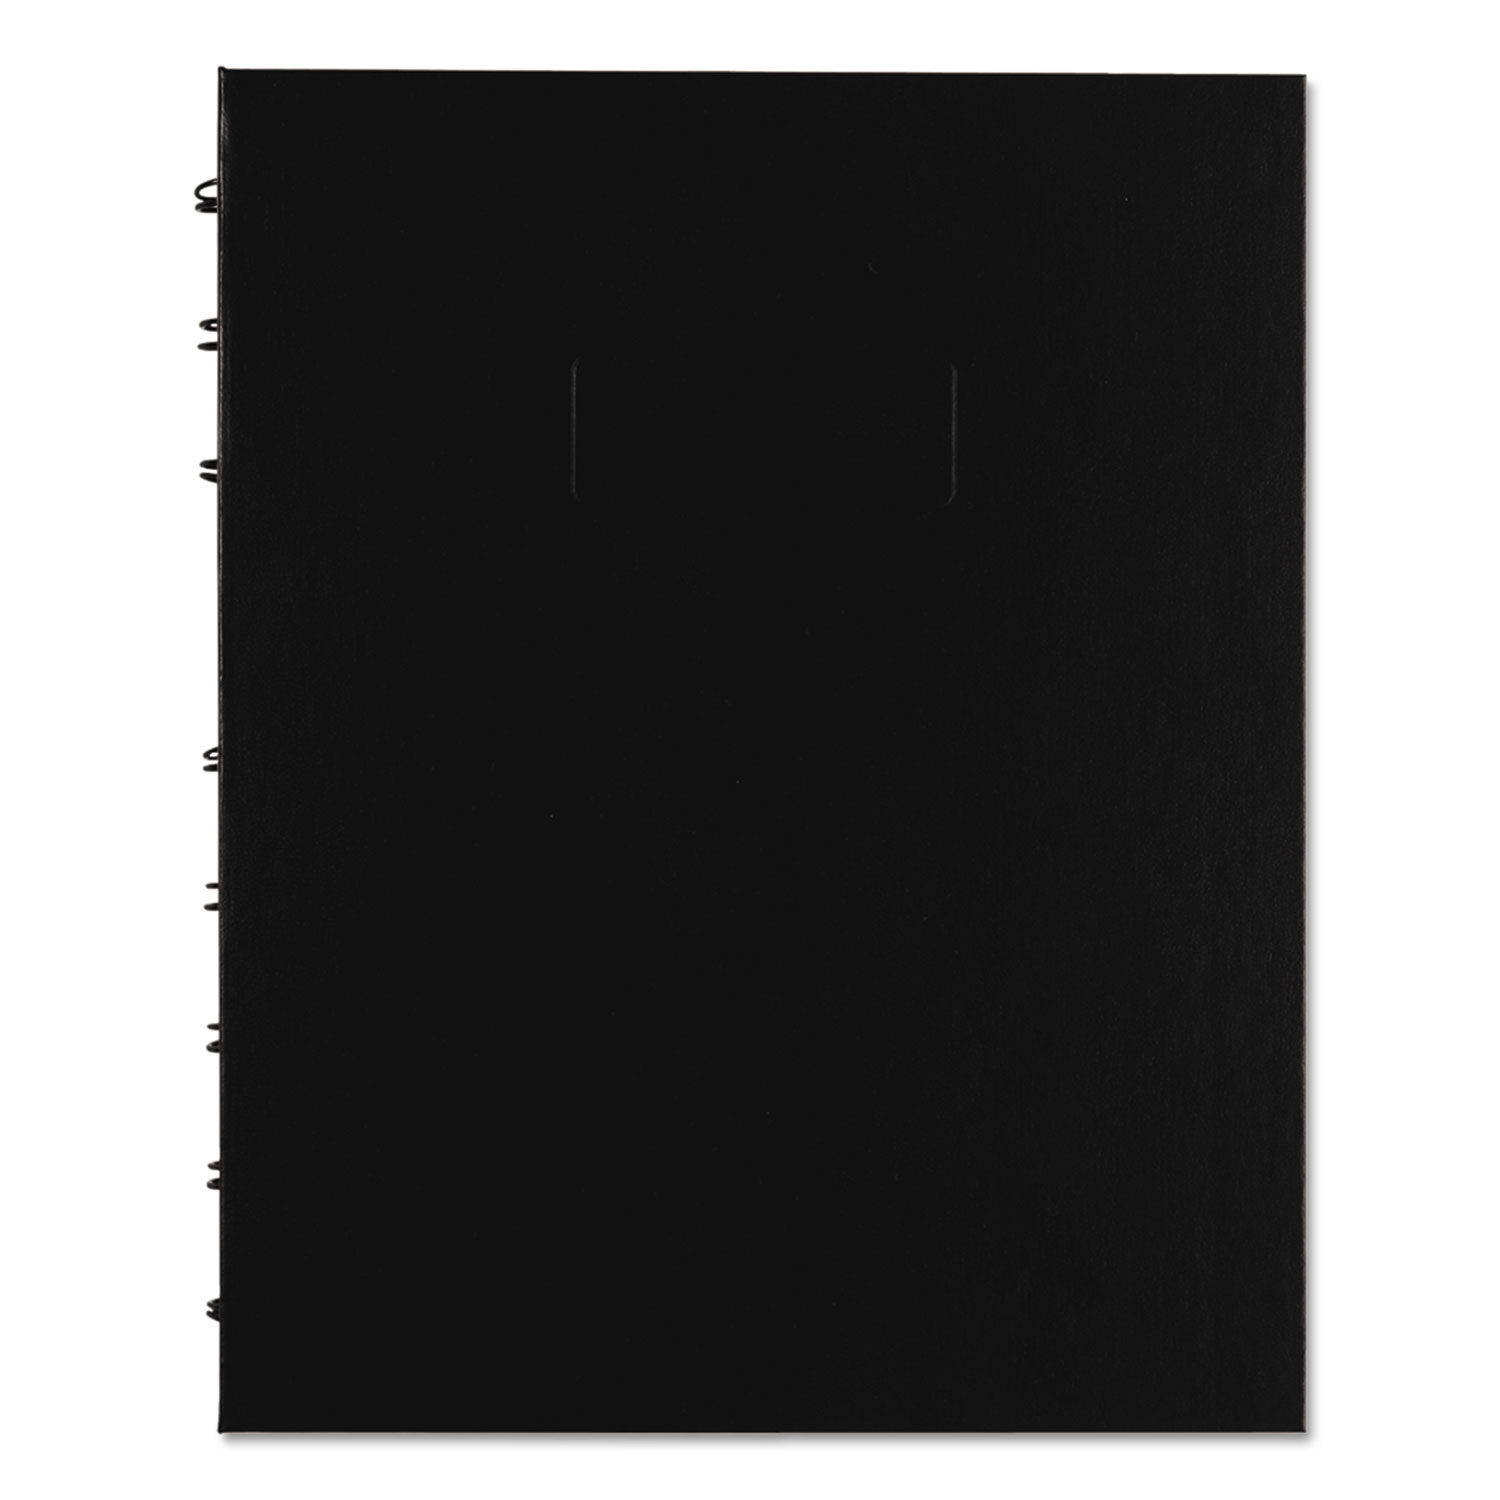  Blueline A44C.81 NotePro Quad Notebook, Narrow/Quadrille Rule, 9.25 x 7.25, White, 96 Sheets (REDA44C81) 